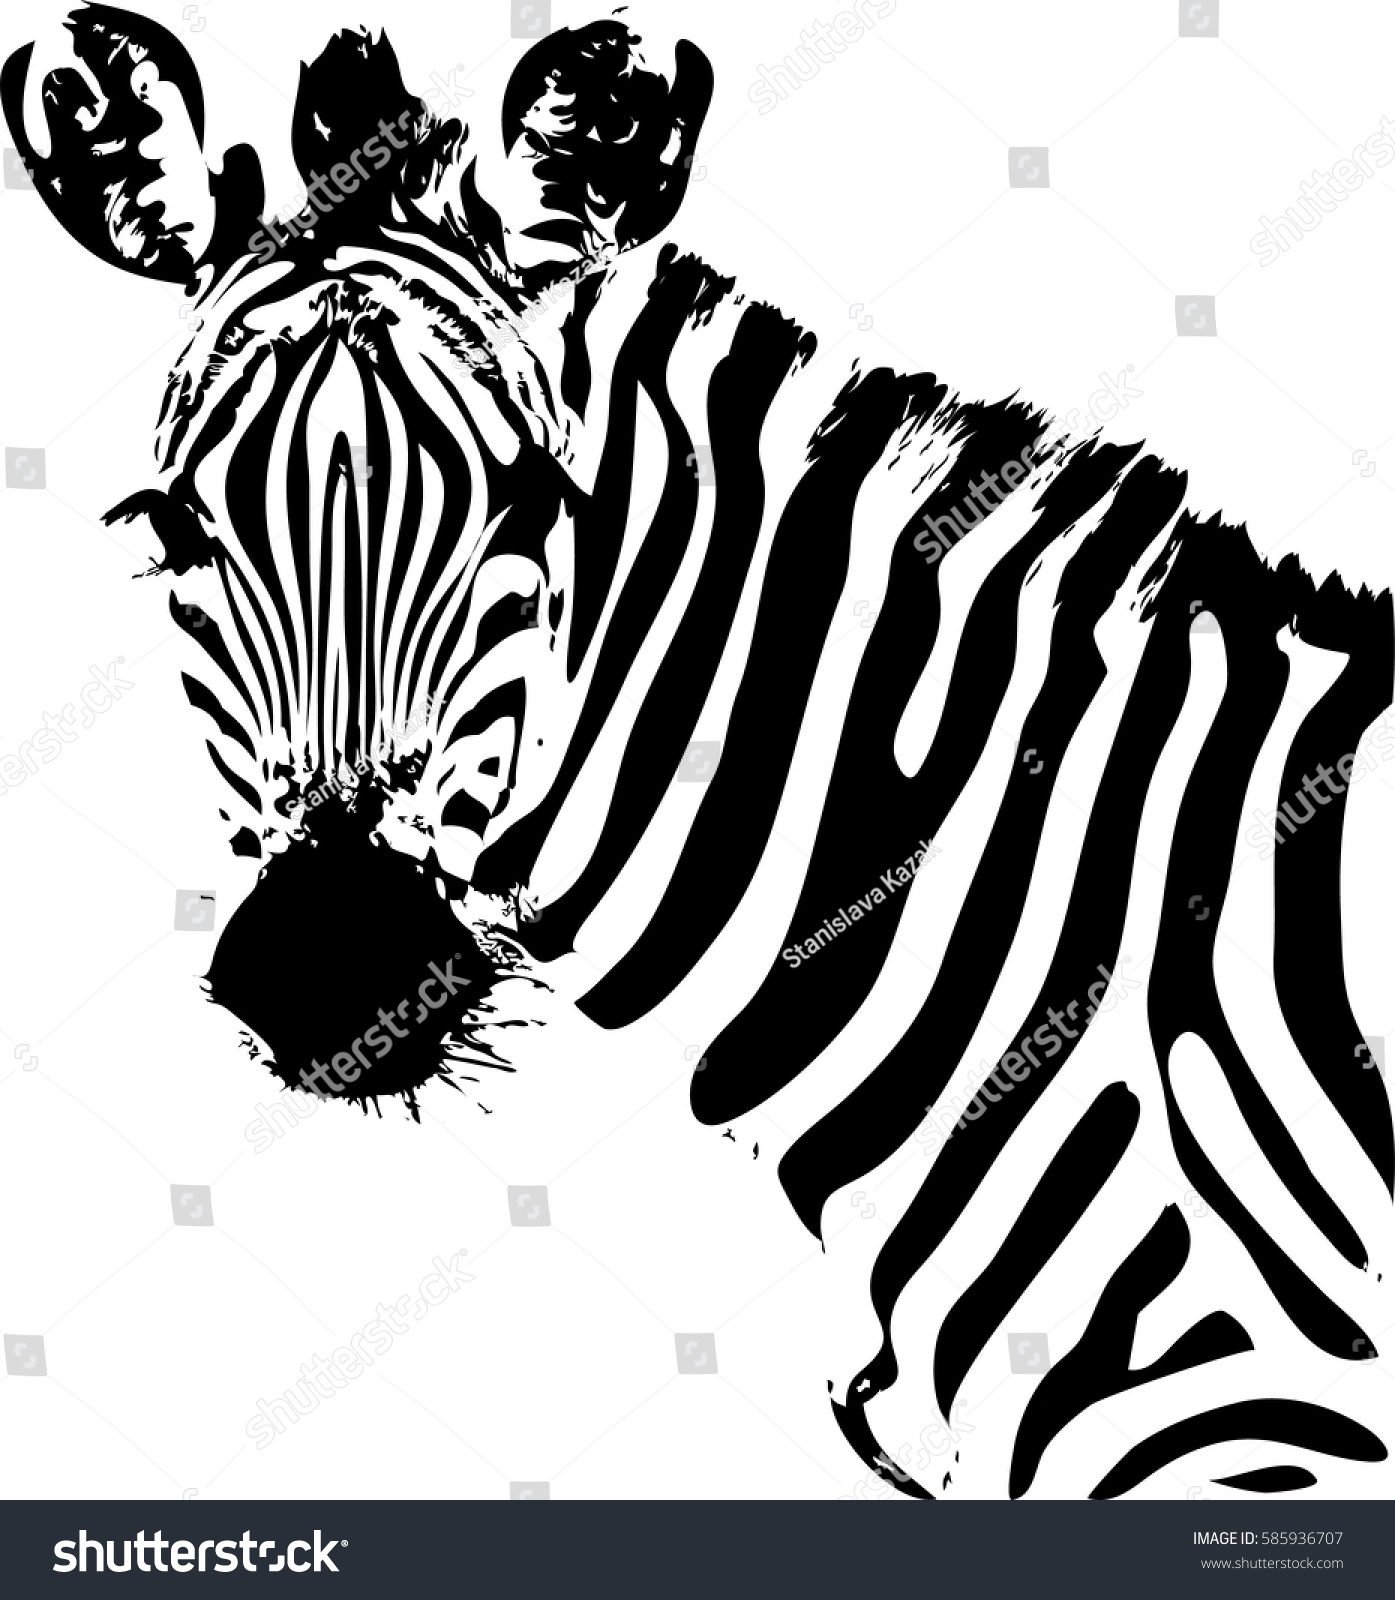 clipart zebra face - photo #33